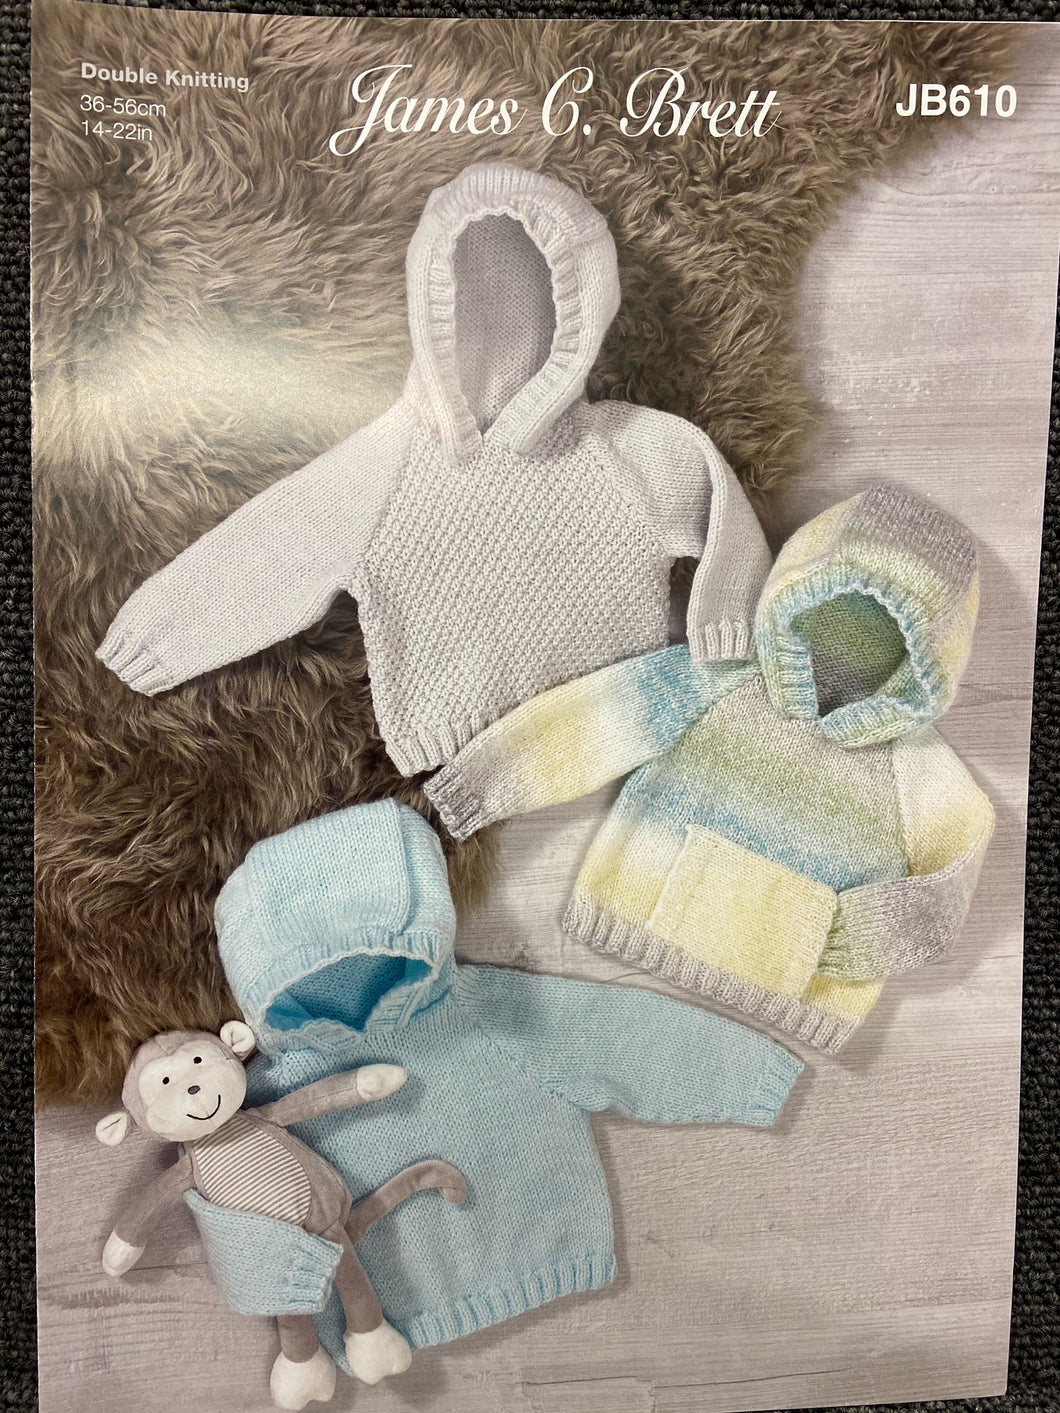 fabric shack knitting crohet knit yarn wool pattern james c brett double knitting dk jb610 hoodie sweatshirt baby childs kids